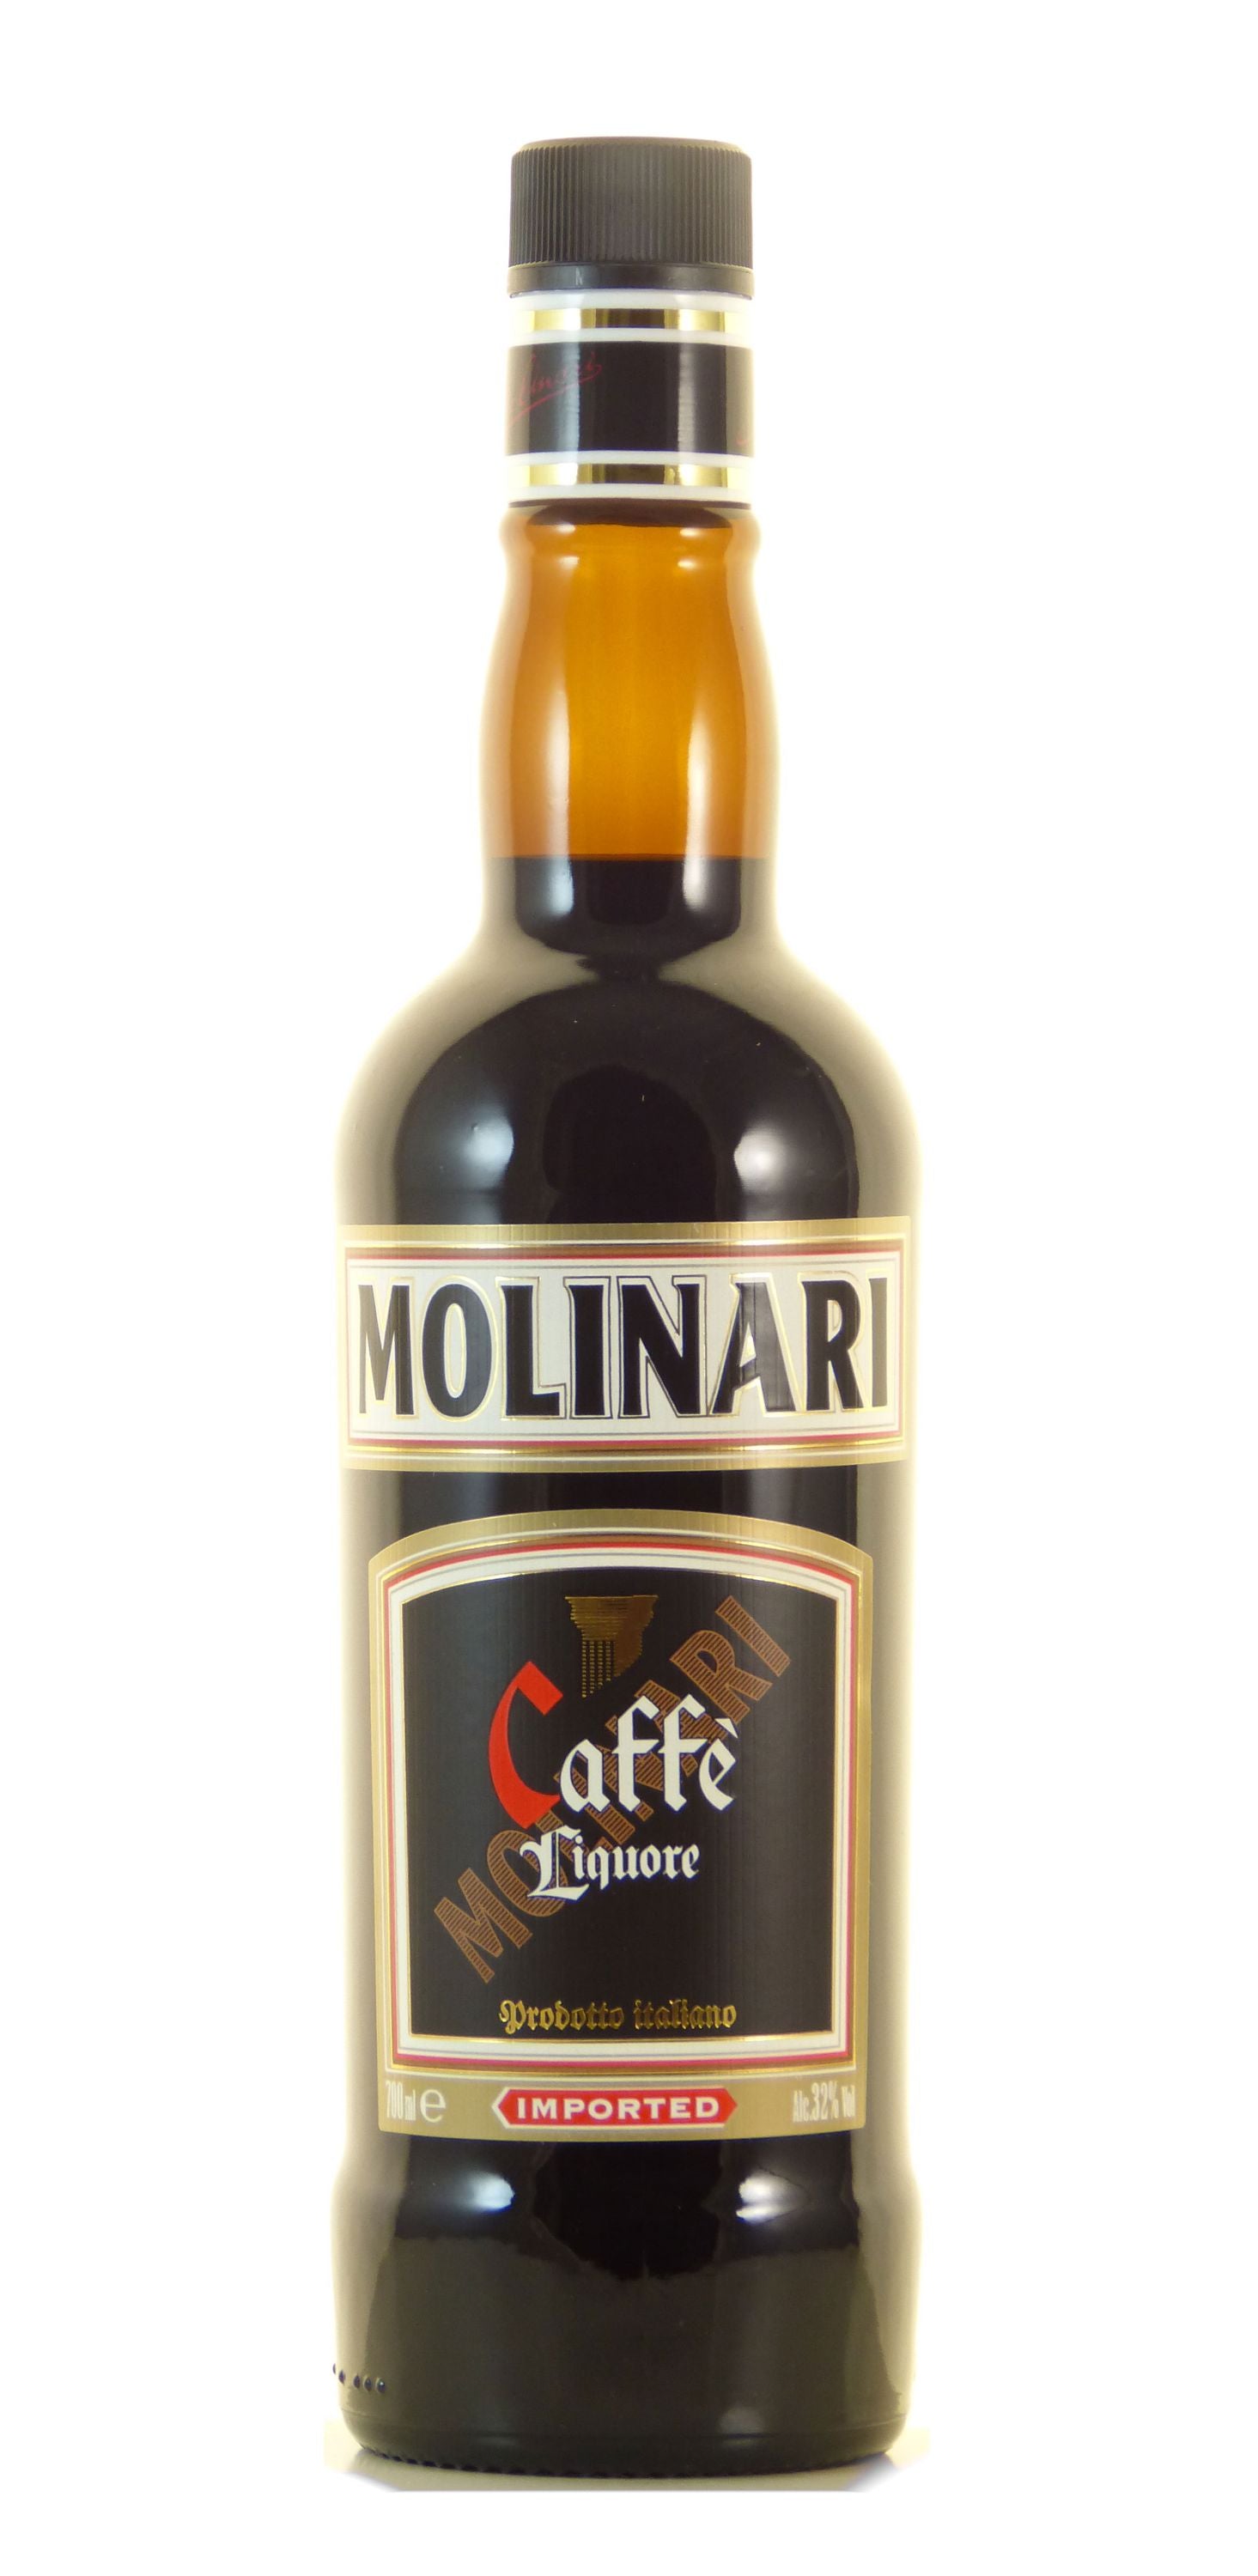 Molinari Caffè 0.7l, alc. 32% by volume, aniseed liqueur Italy